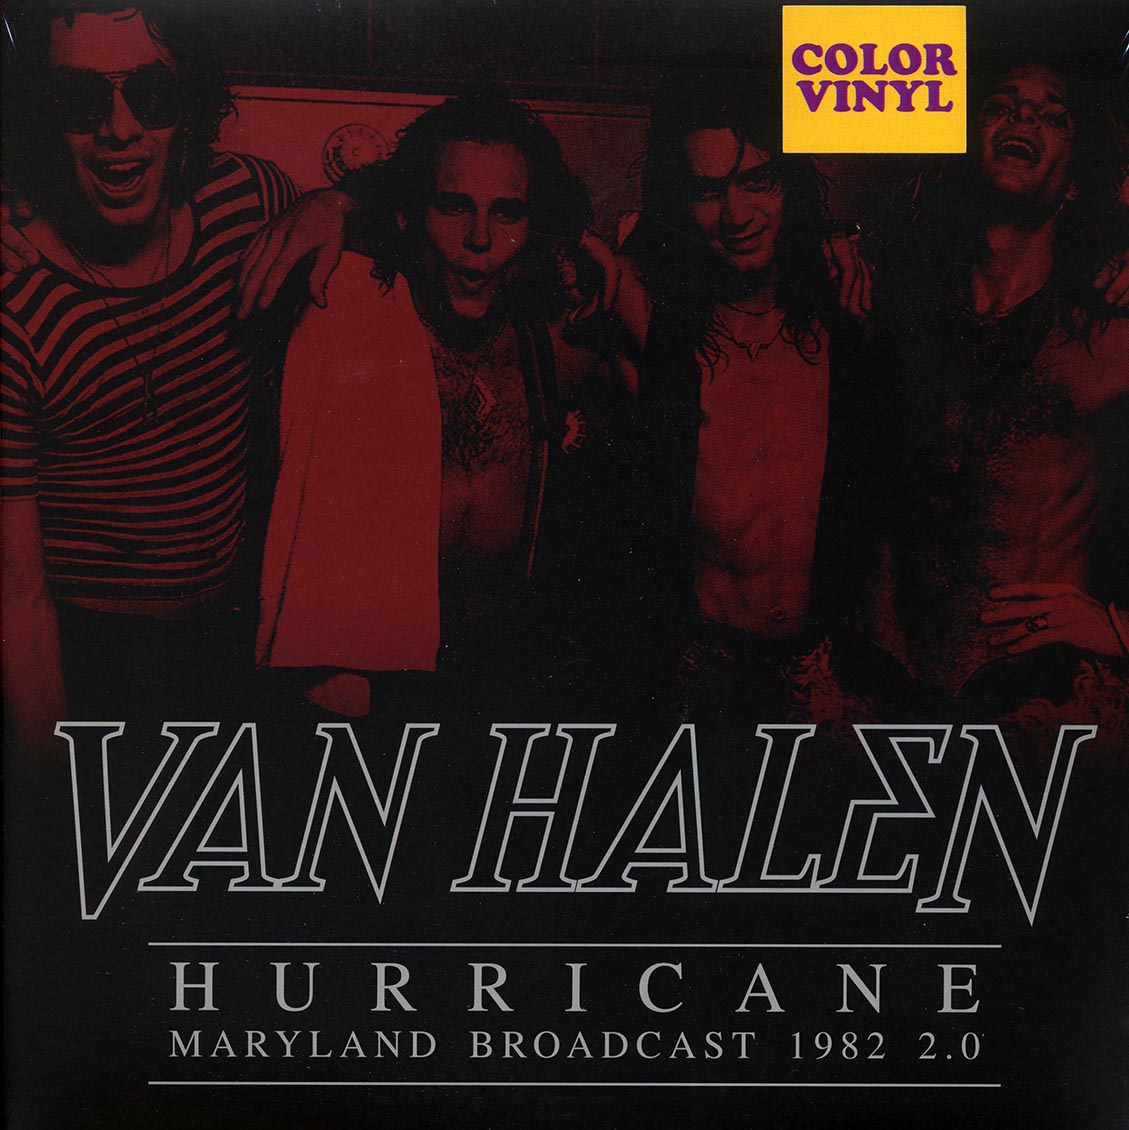 Van Halen - Hurricane: Maryland Broadcast 1982 2.0, Capital Center, Landover, MD October 1982 (ltd. ed.) (2xLP) (clear vinyl) - Vinyl LP